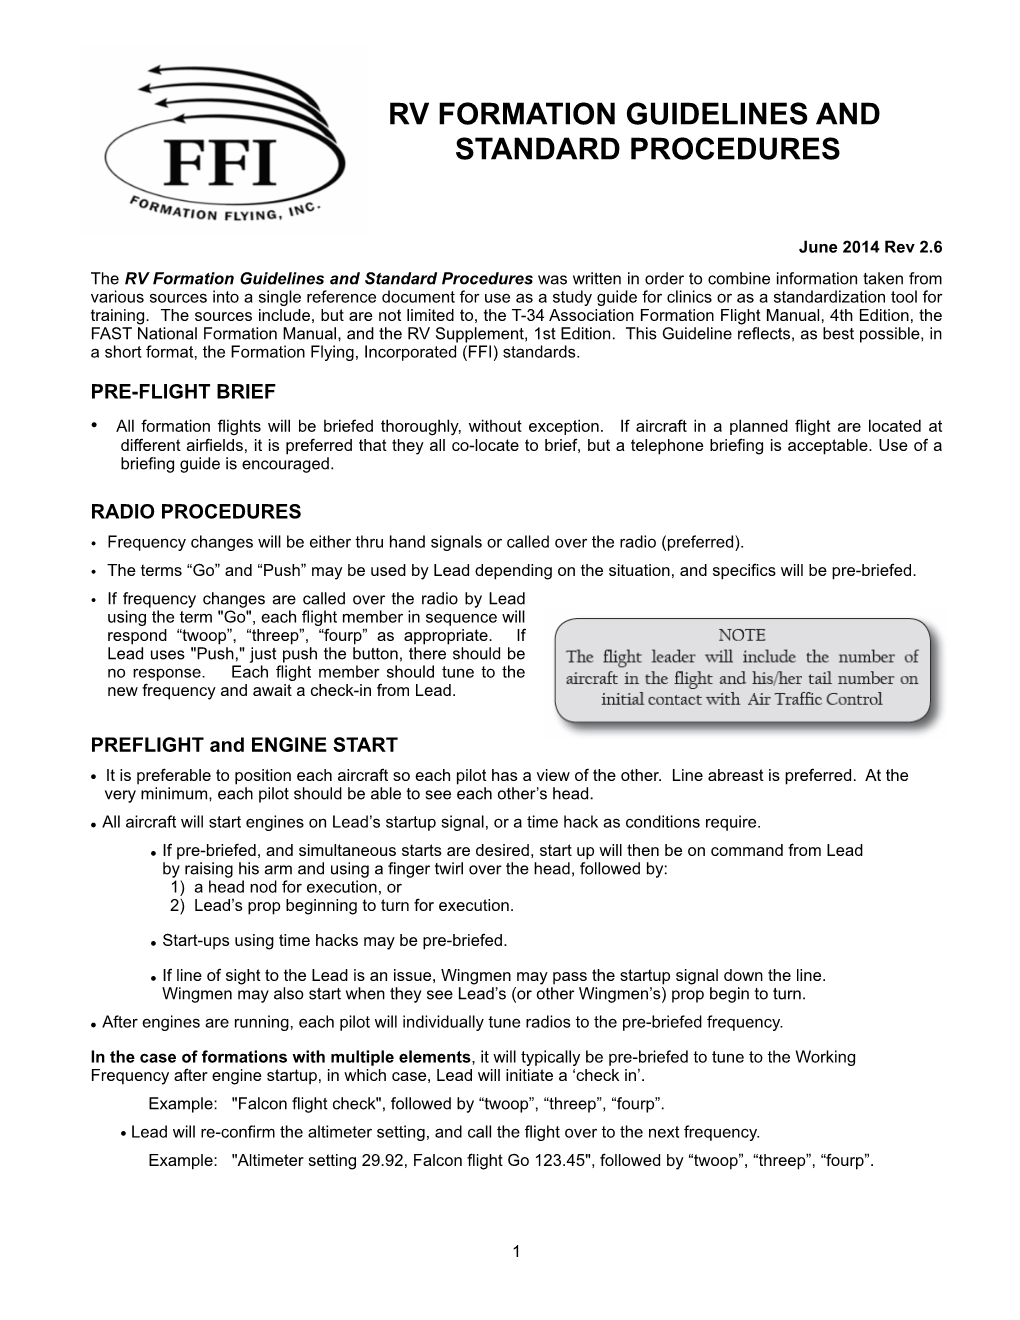 FFI FORM GUIDE V2.6 Inwork.Pages